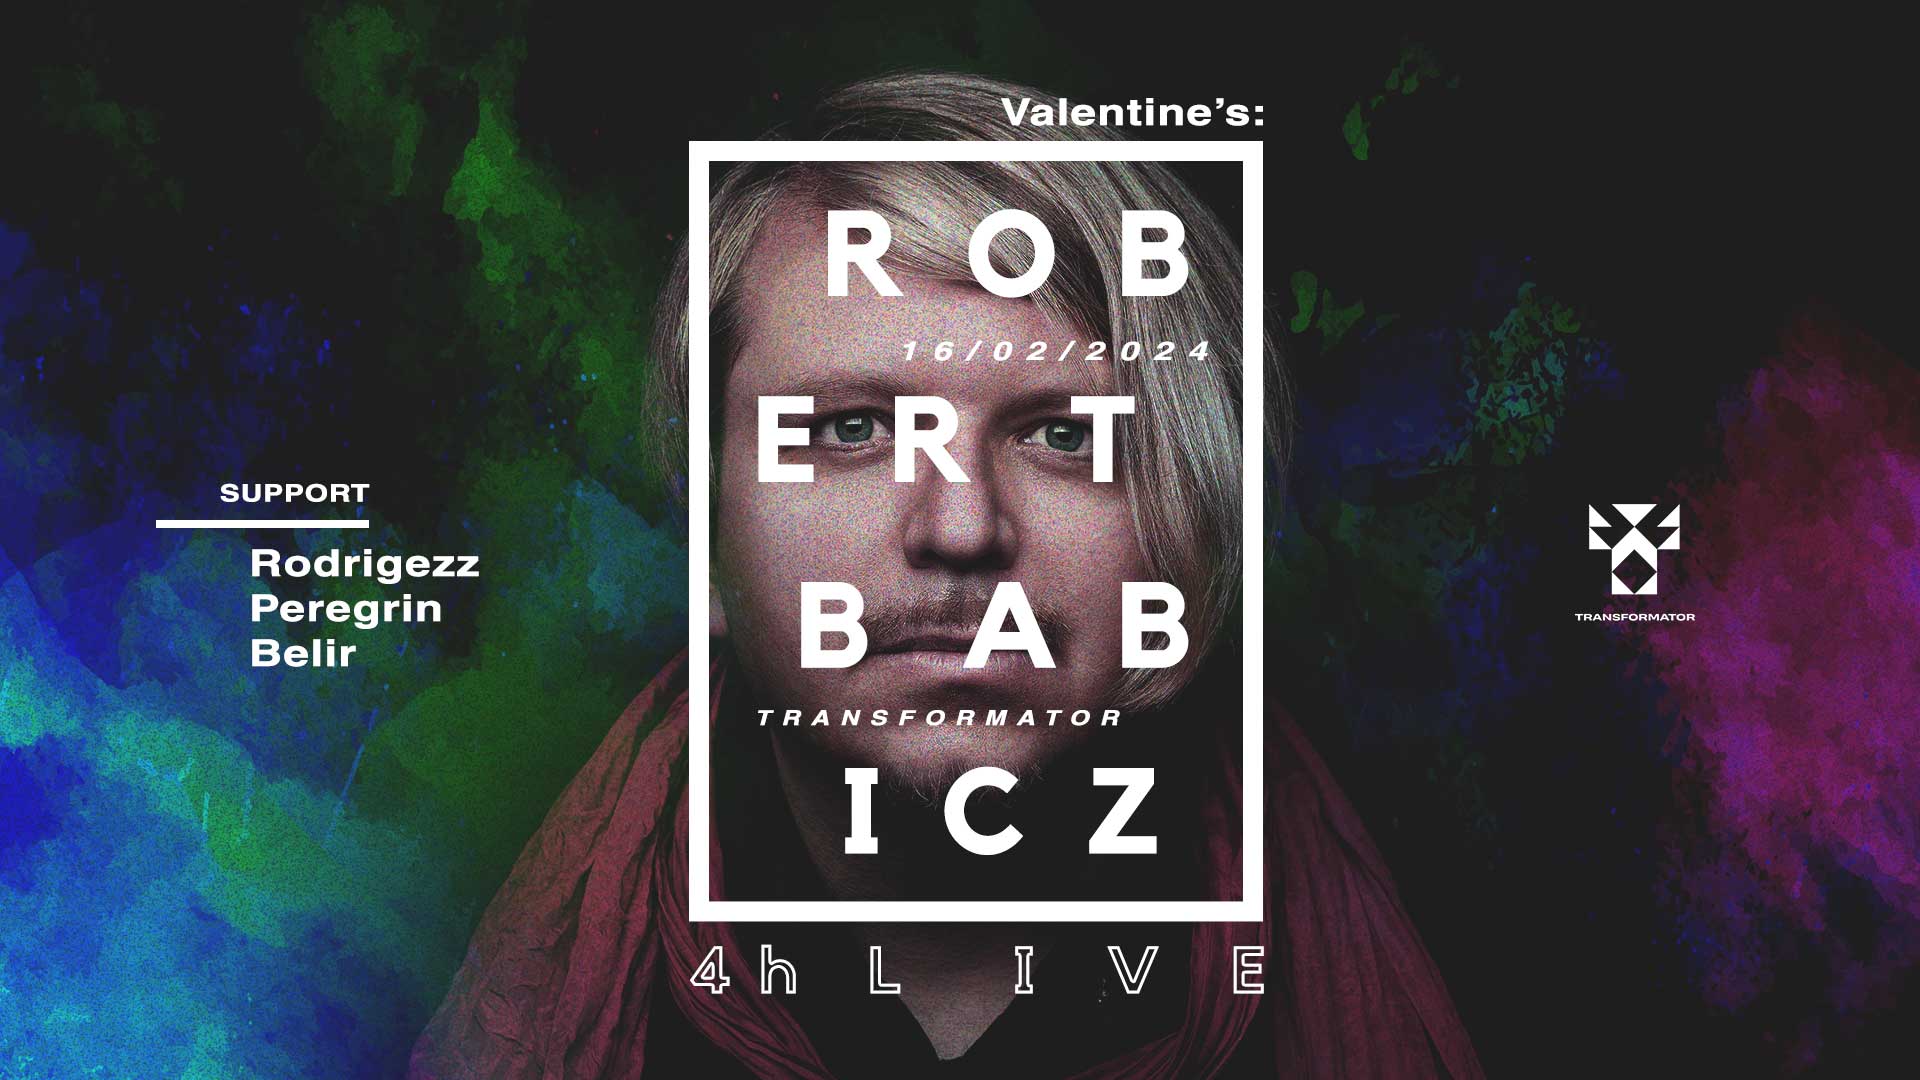 Valentine’s: Robert Babicz 4h live